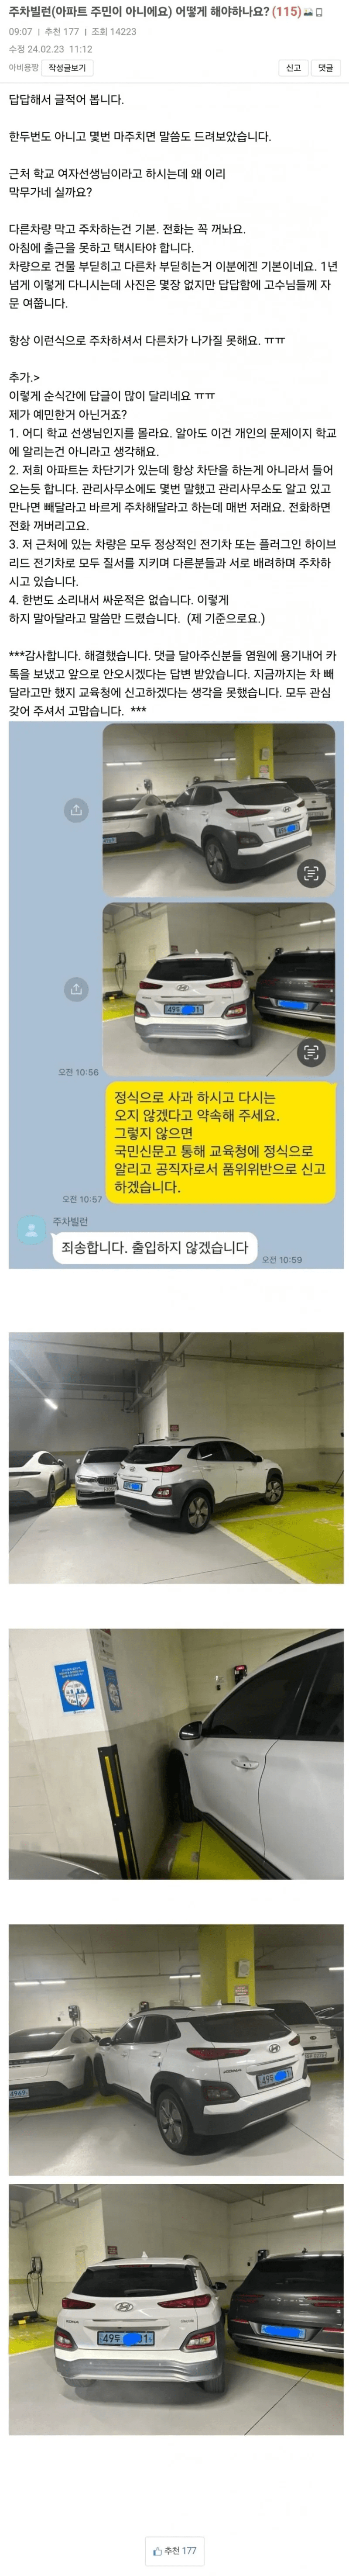 image.png 남의 아파트에 ㅈ같이 주차하는 빌런.jpg